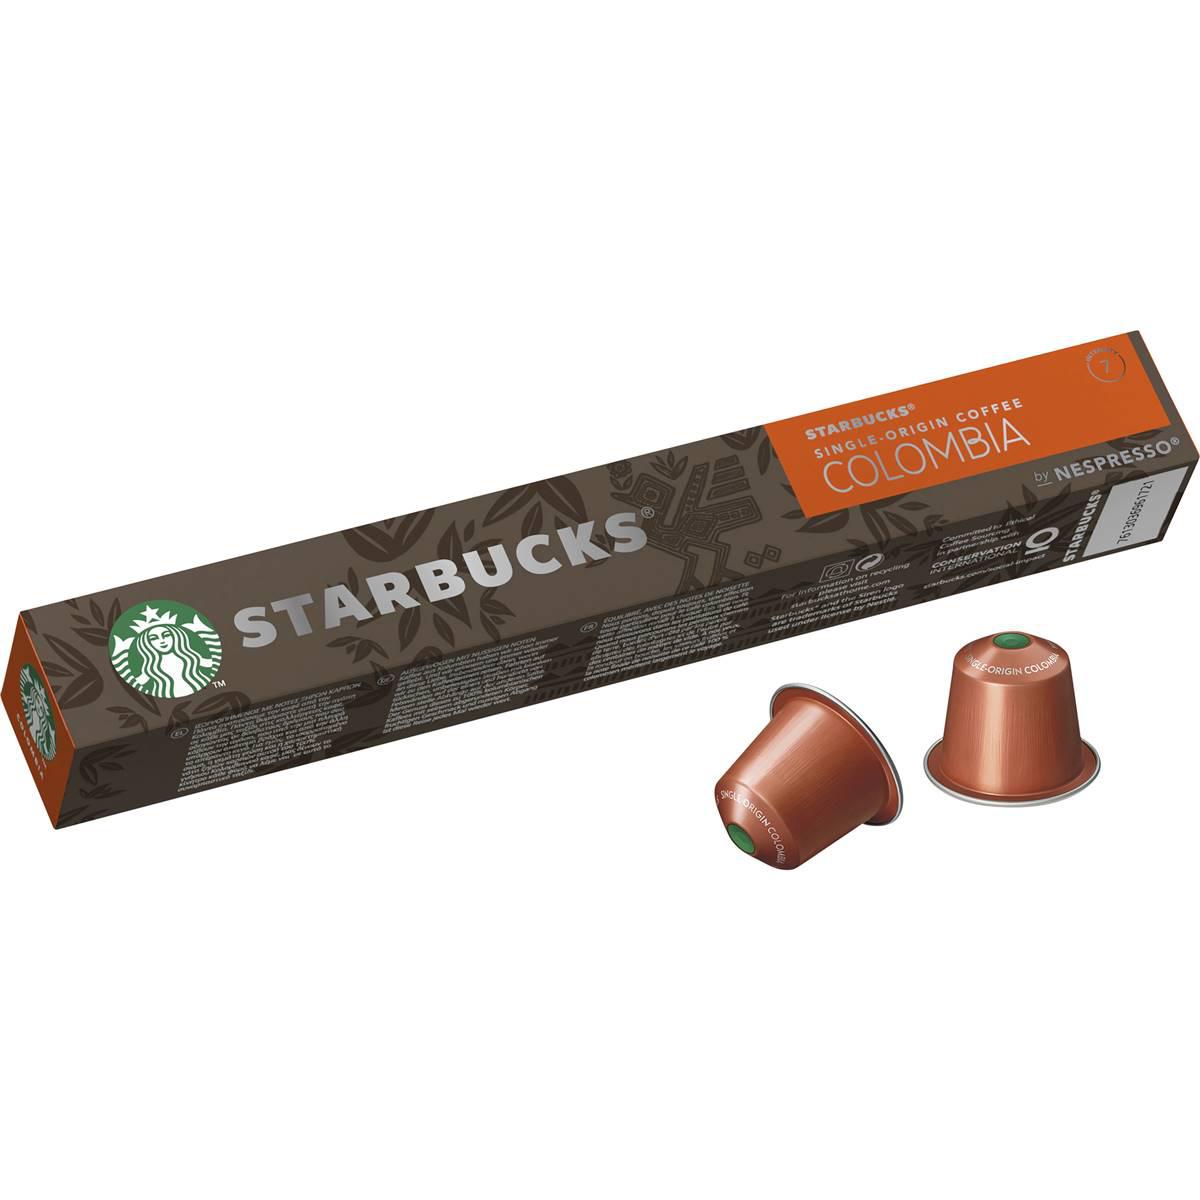 Starbucks By Nespresso Single Origin Colombia Coffee Pods Capsules 10 Pack